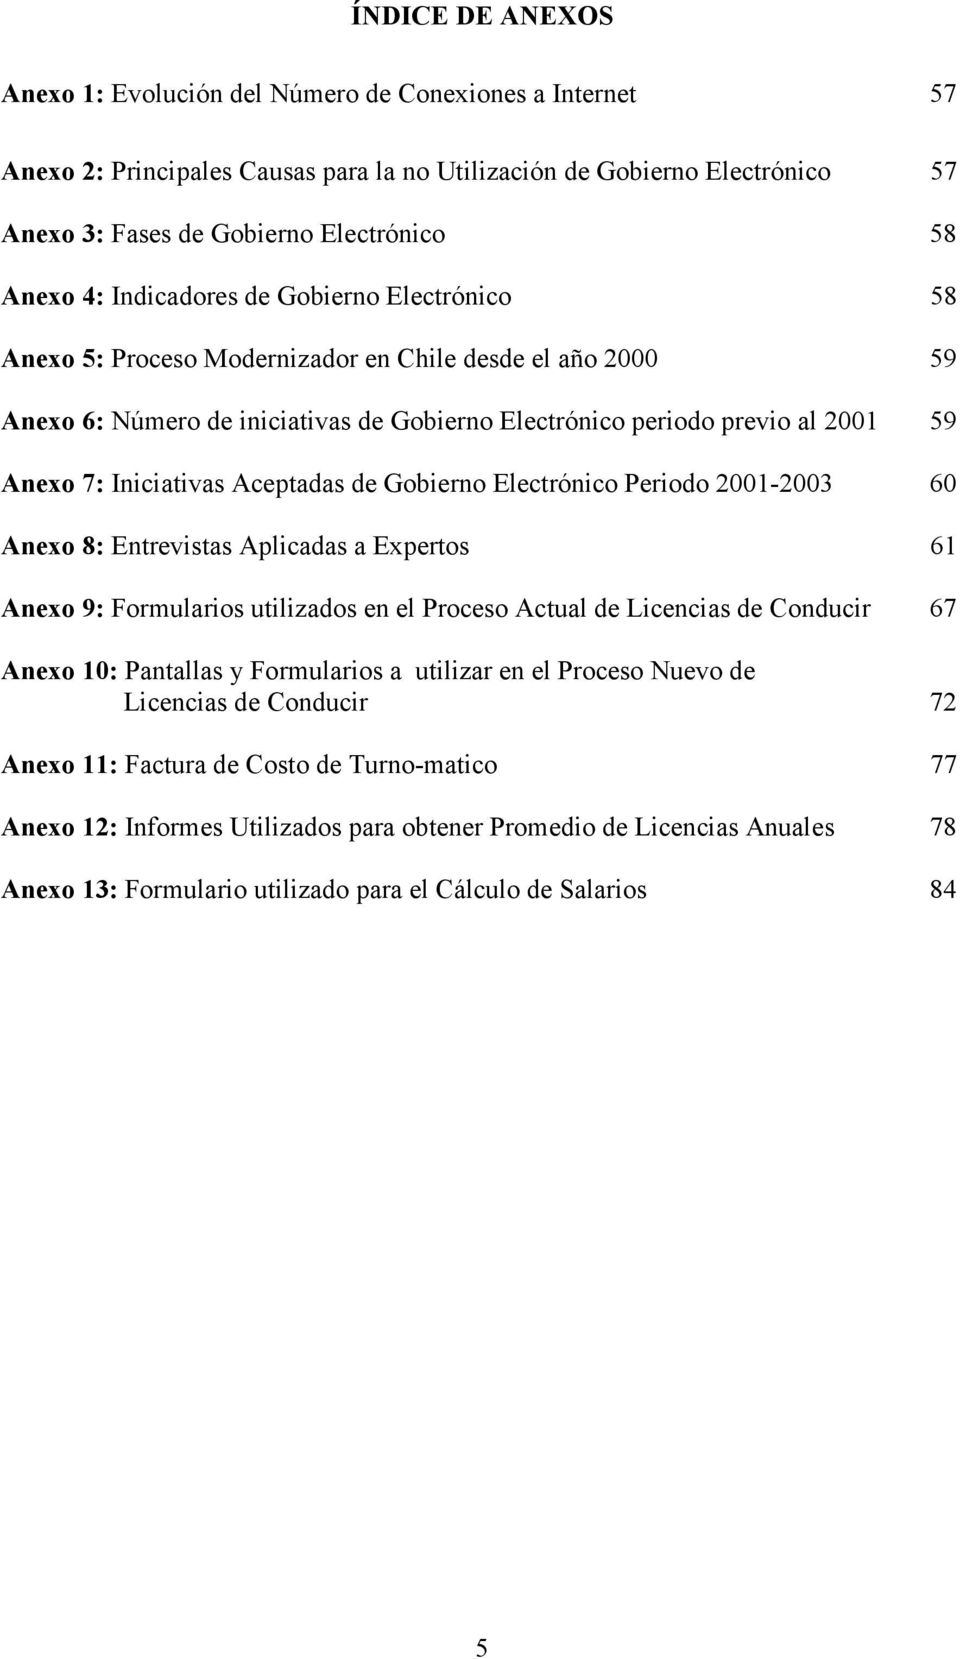 Iniciativas Aceptadas de Gobierno Electrónico Periodo 2001-2003 60 Anexo 8: Entrevistas Aplicadas a Expertos 61 Anexo 9: Formularios utilizados en el Proceso Actual de Licencias de Conducir 67 Anexo